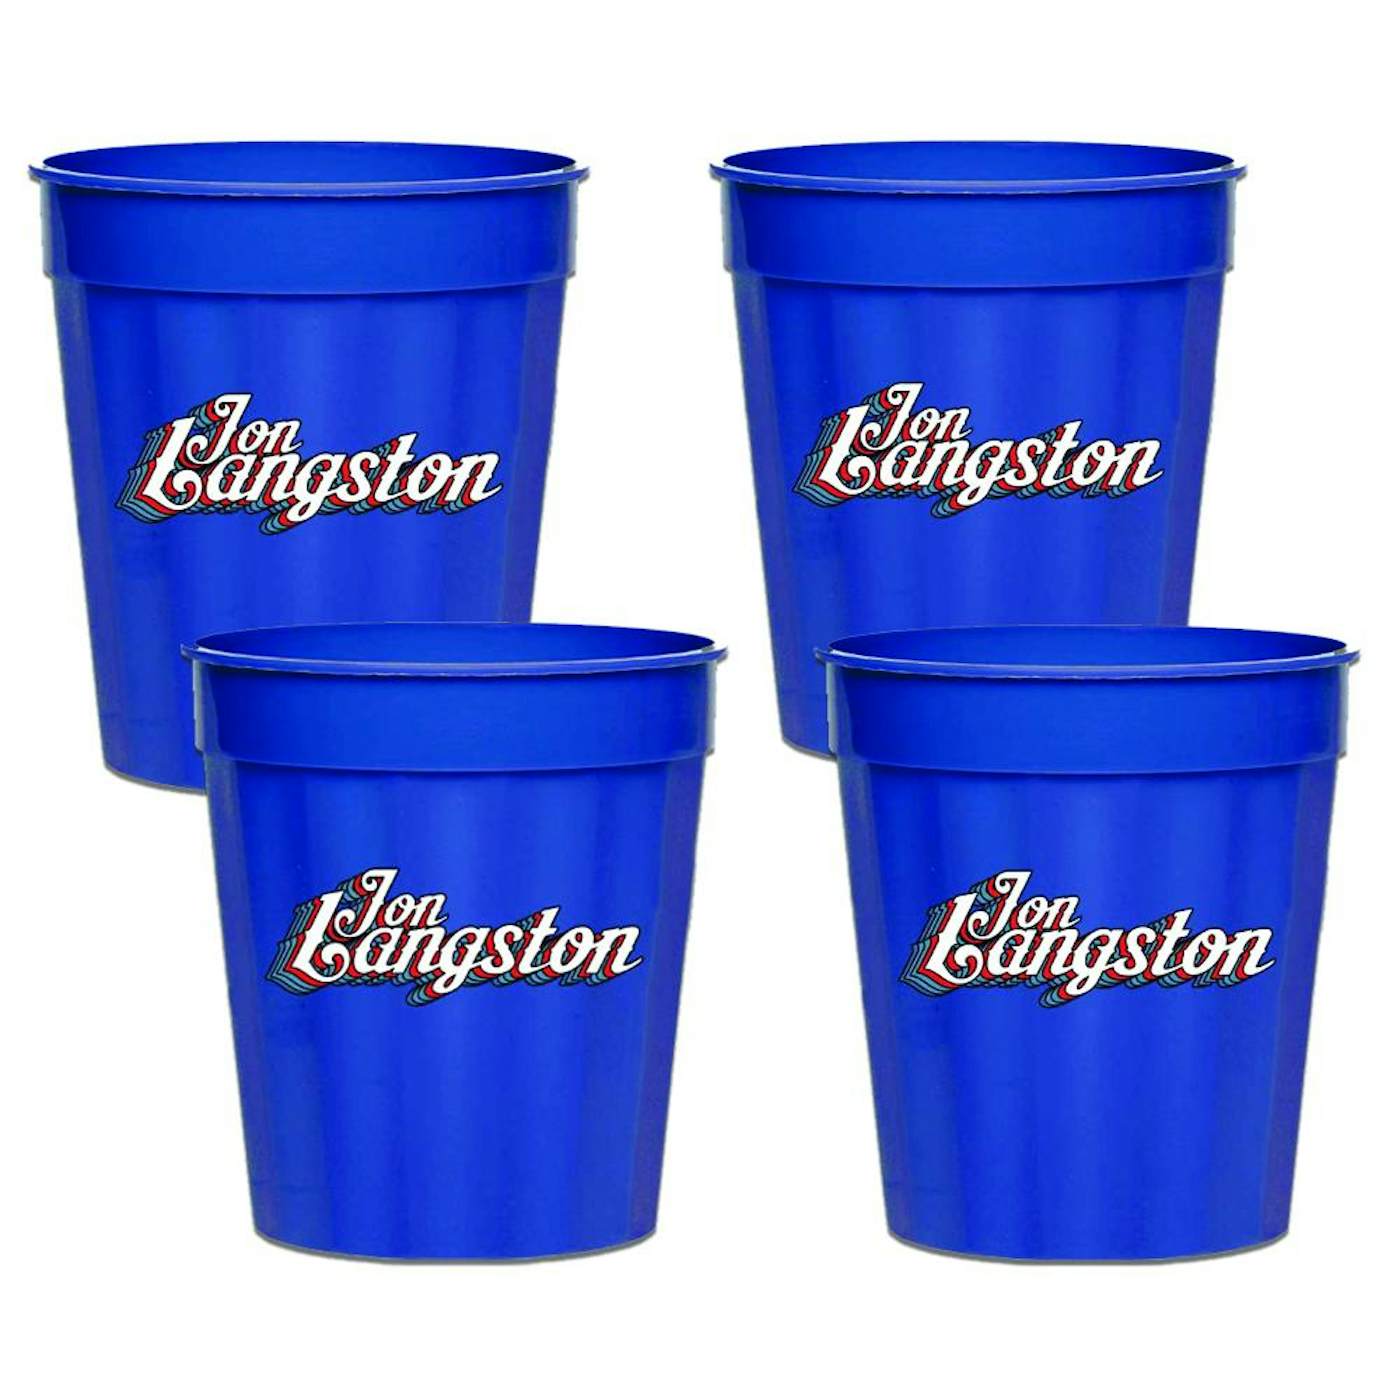 Jon Langston Stadium Cups - Blue Plastic (Set of 4)